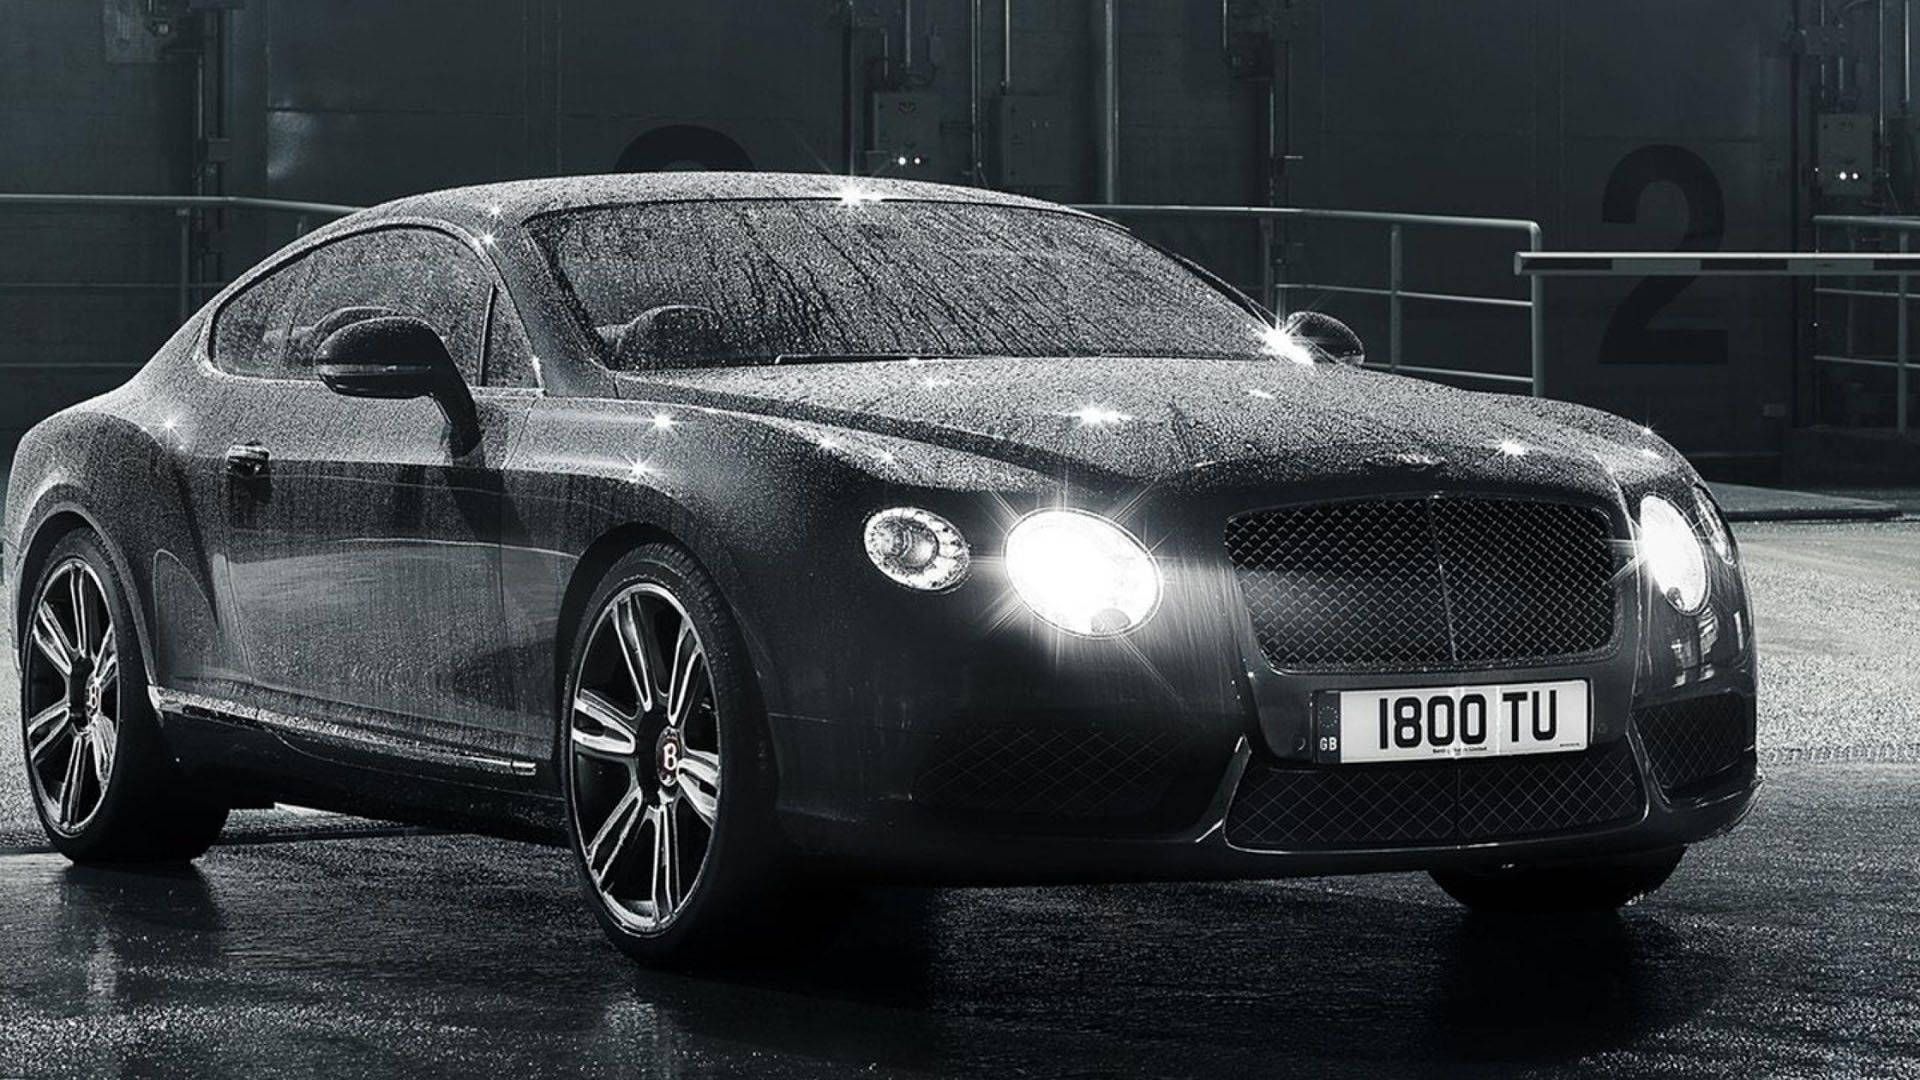 Continentalgt I Regnet - Bentleybilar. Wallpaper